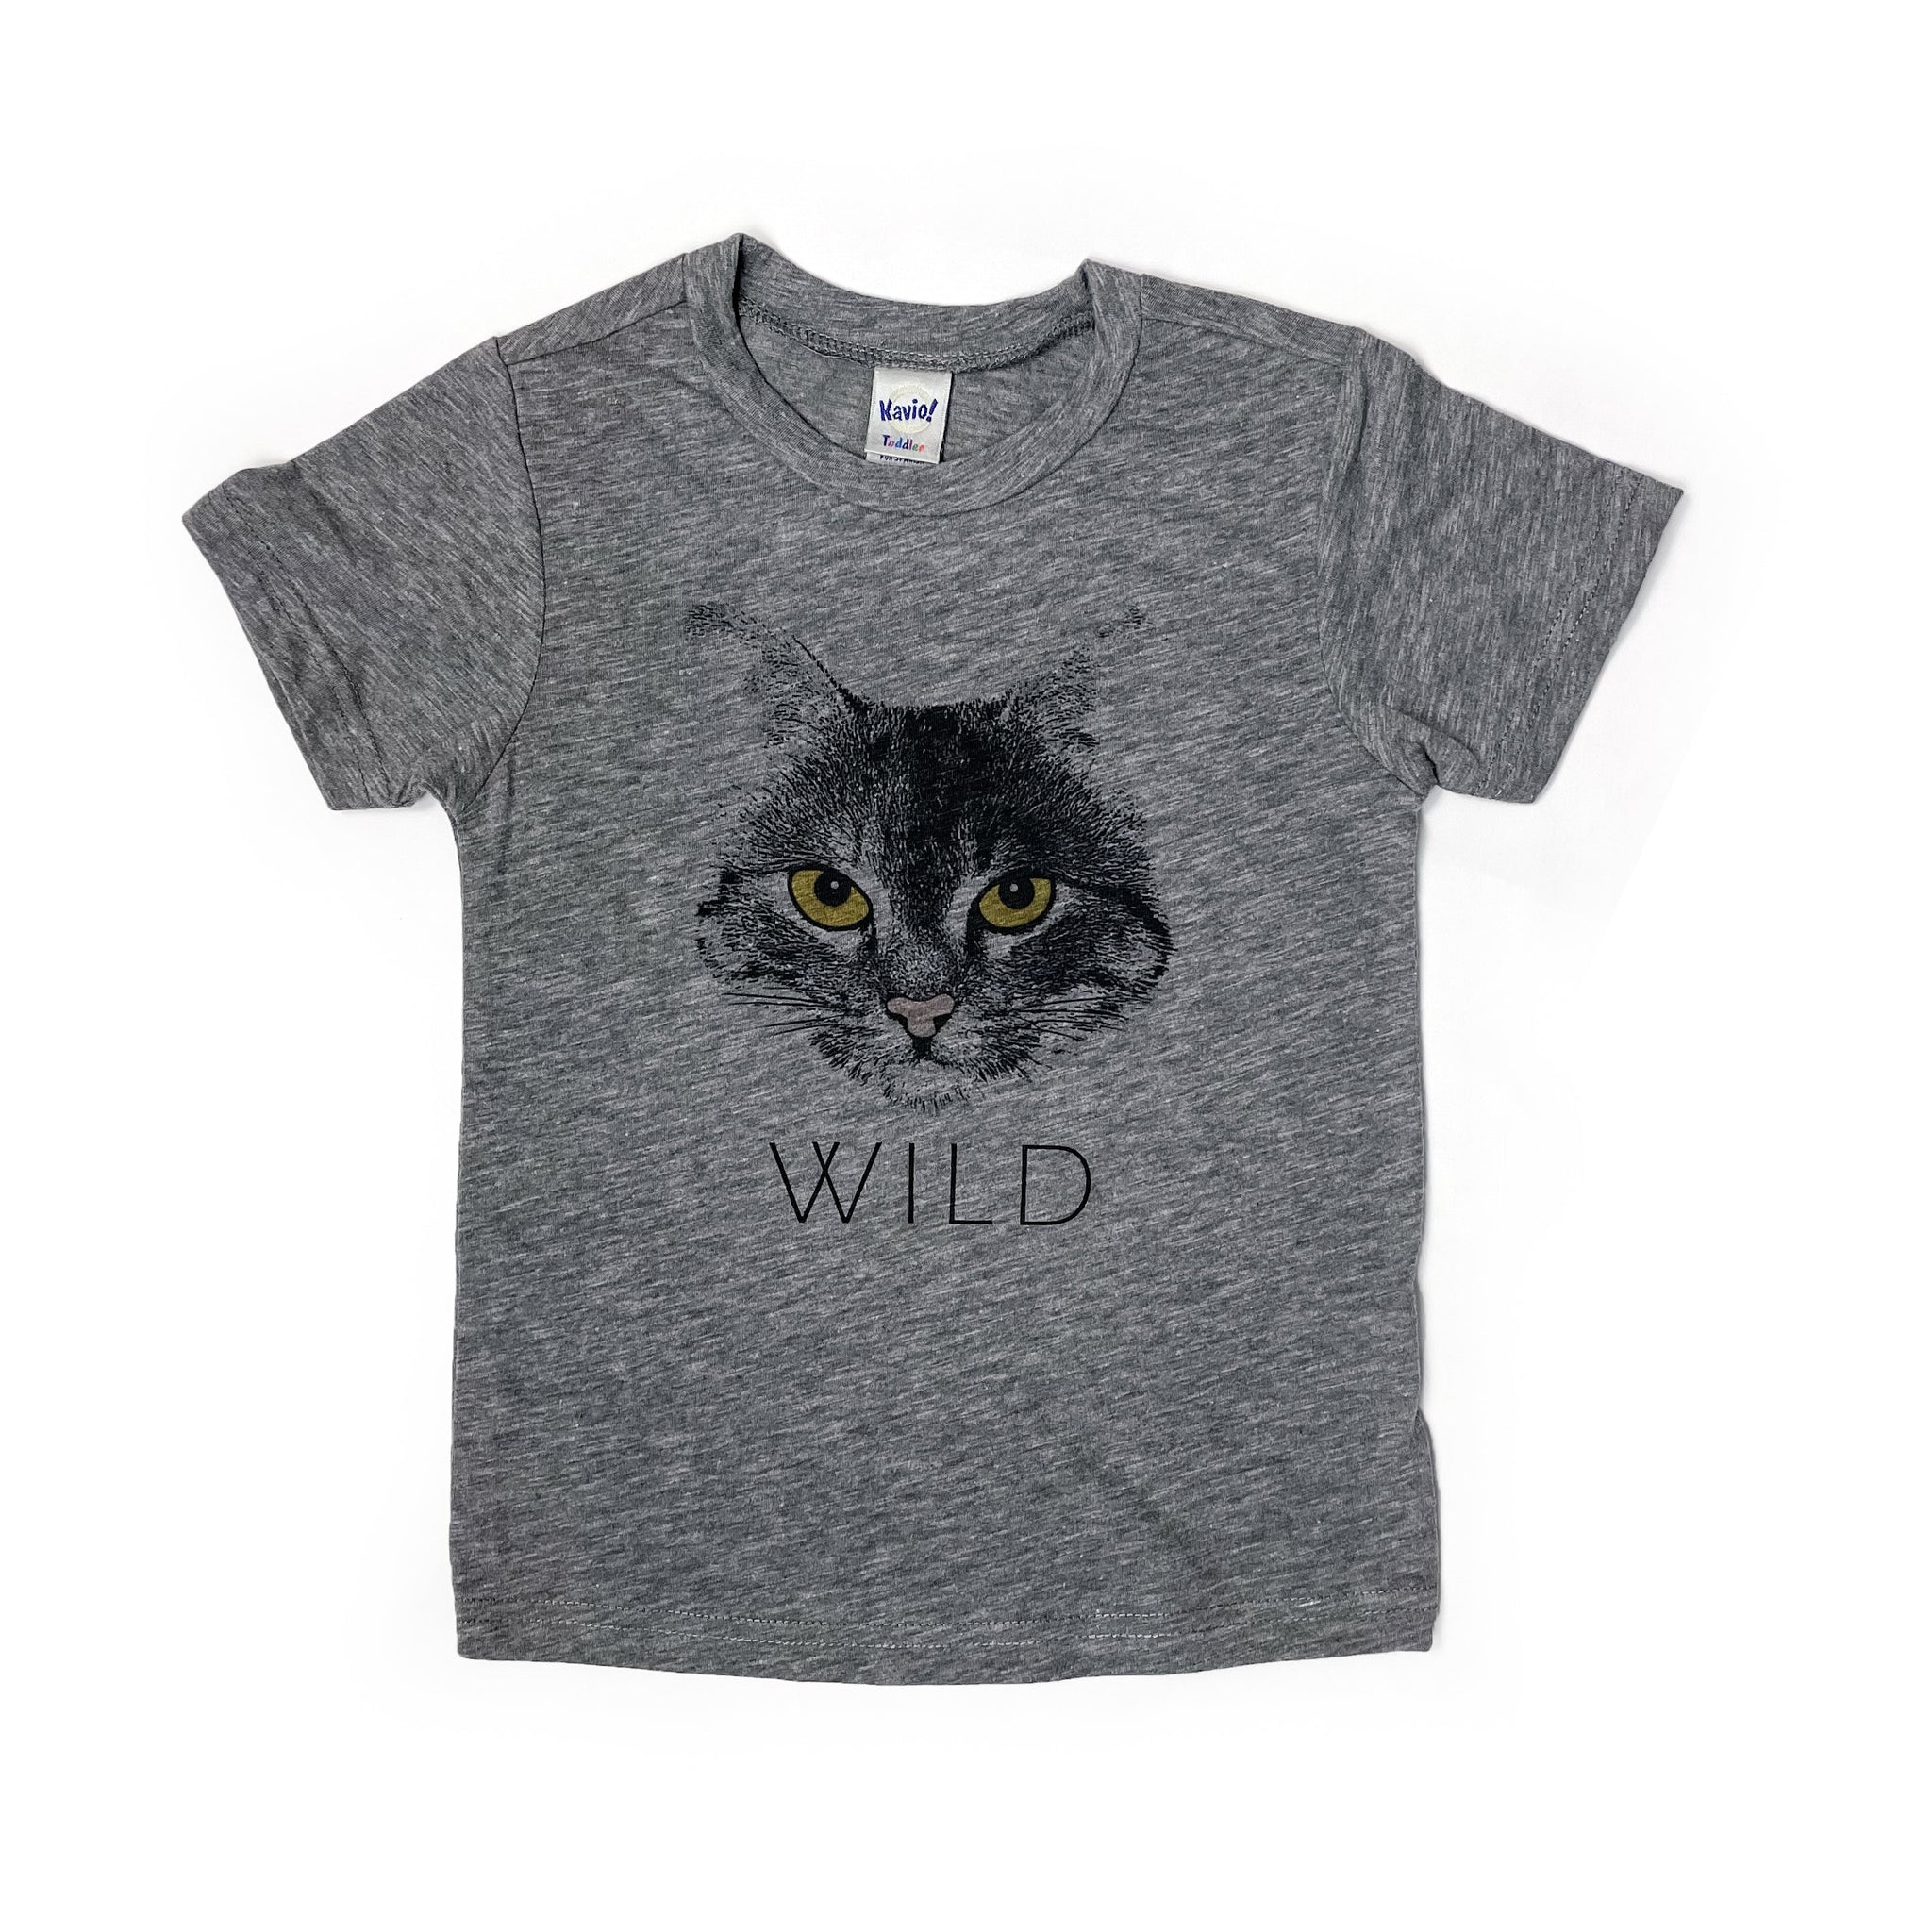 Wild Cat, tshirt